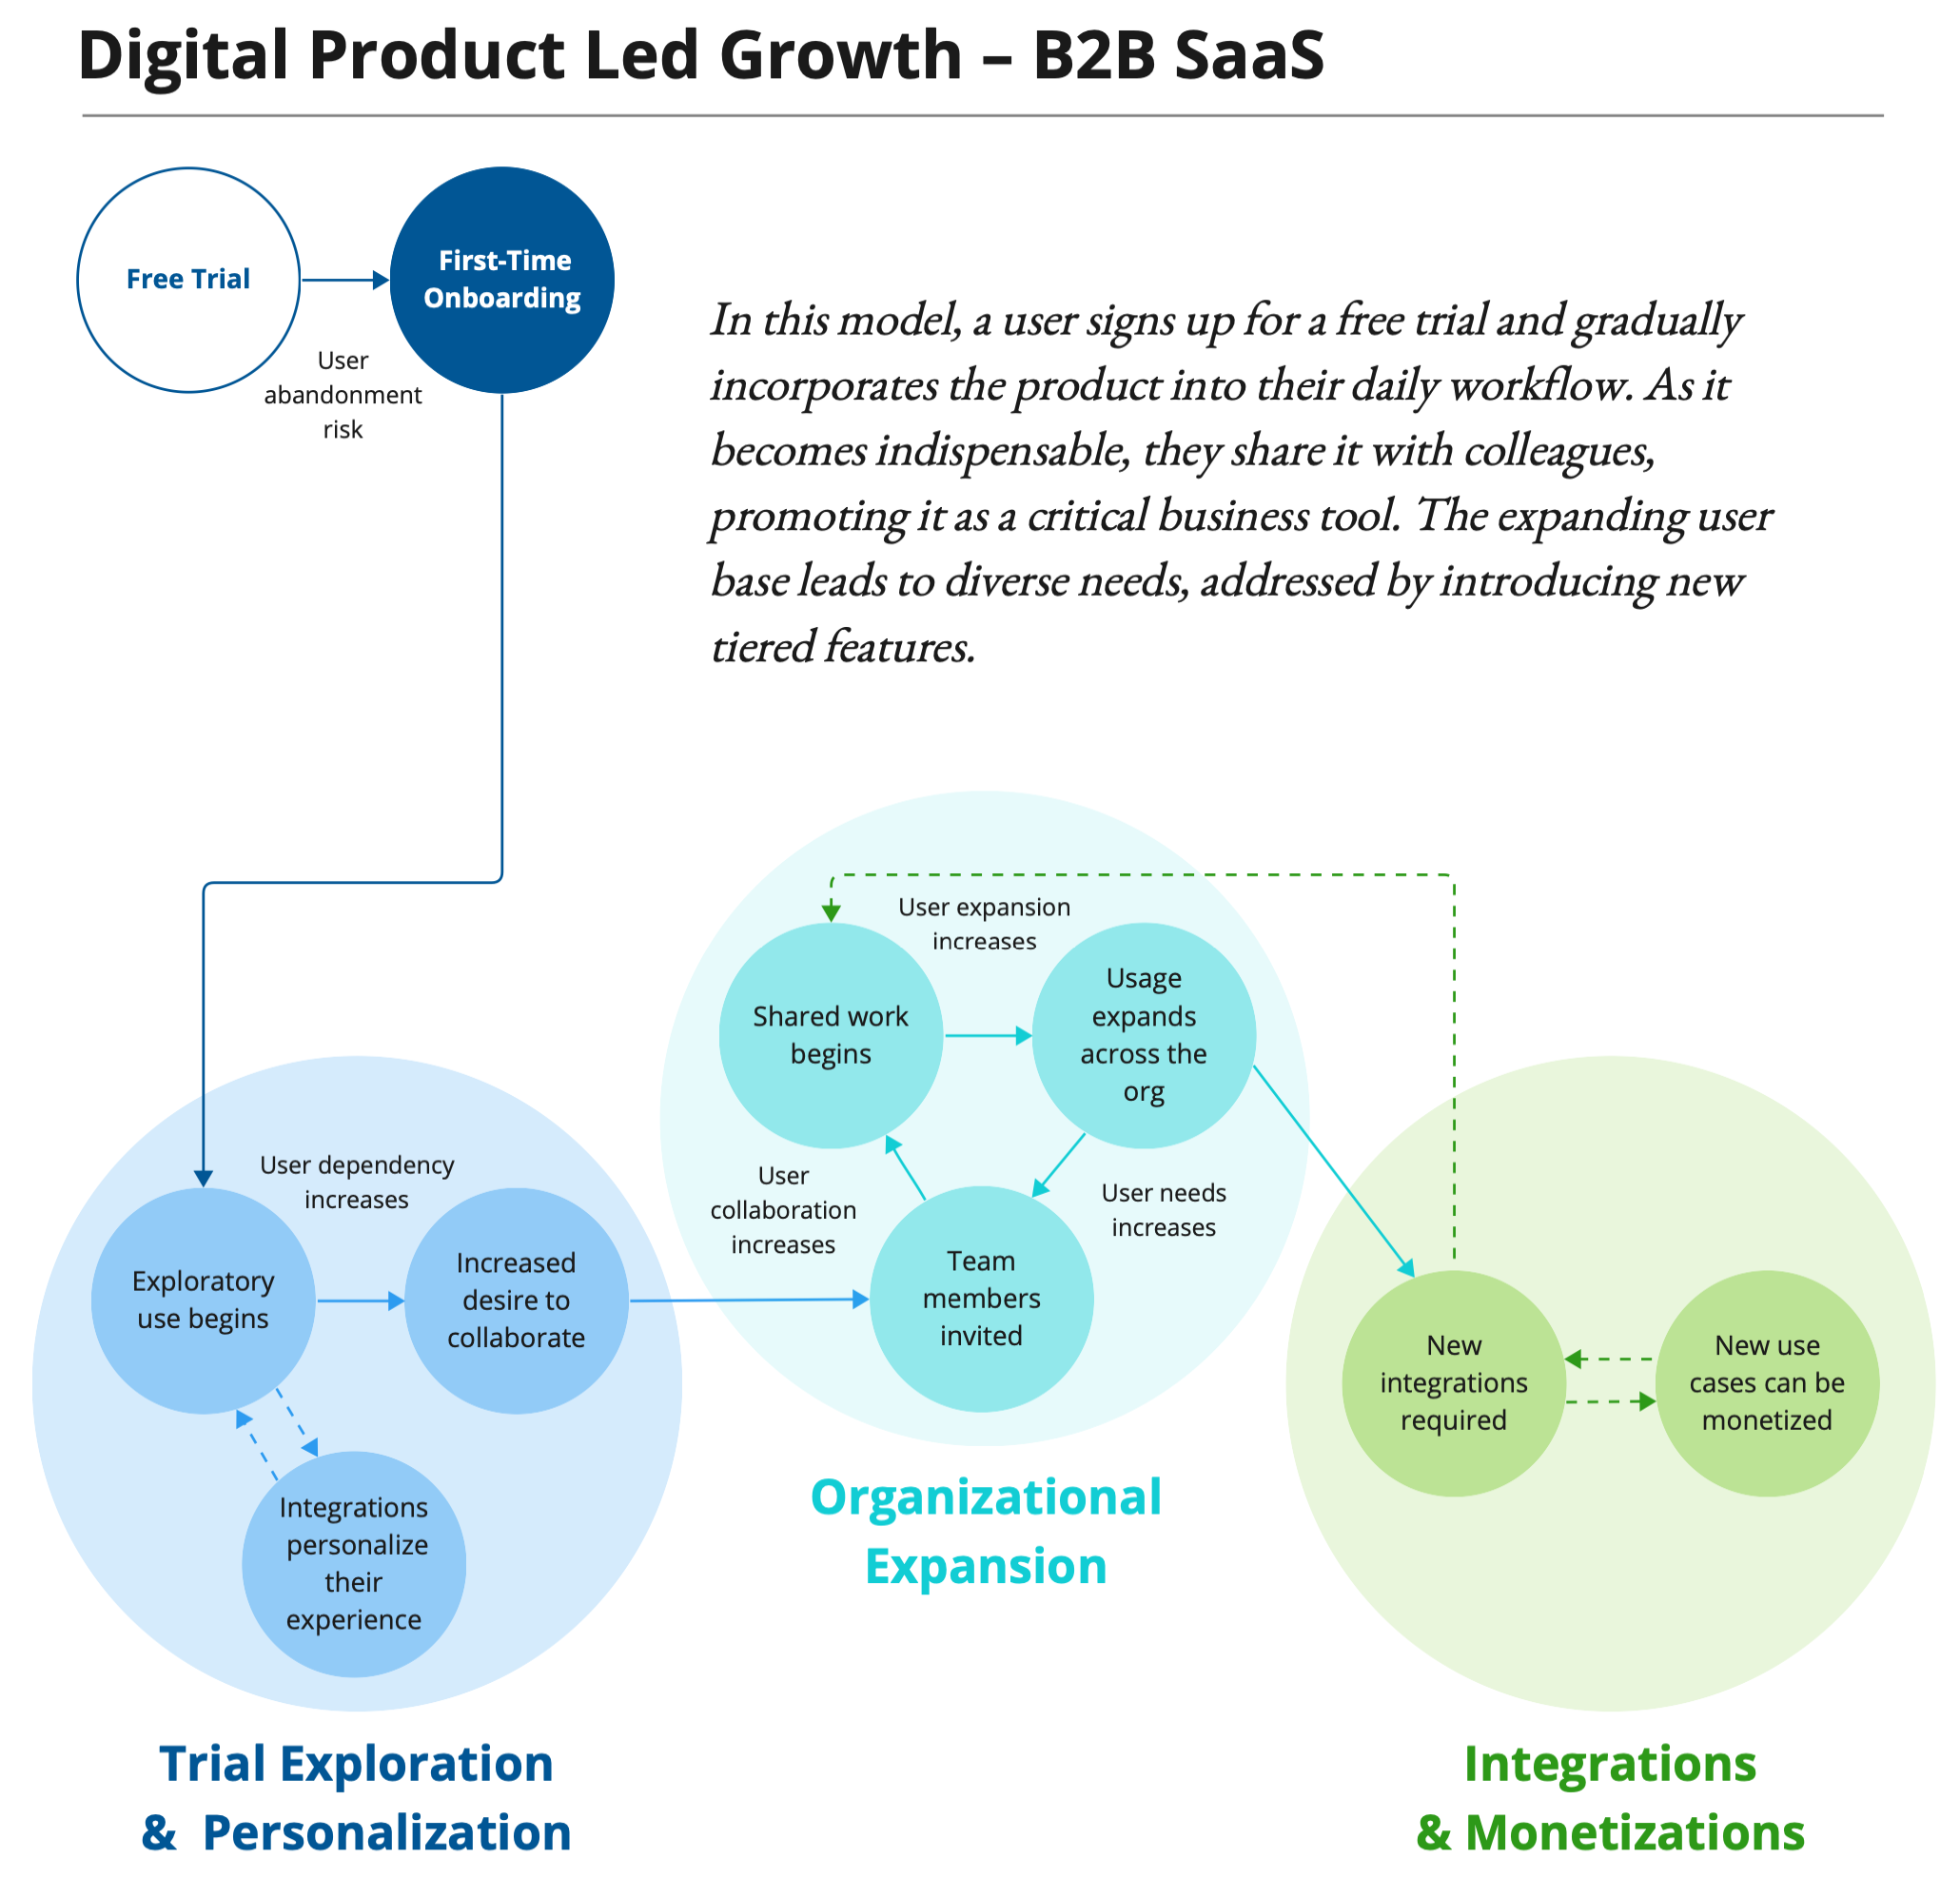 Digital Product Led Growth - B2B SaaS